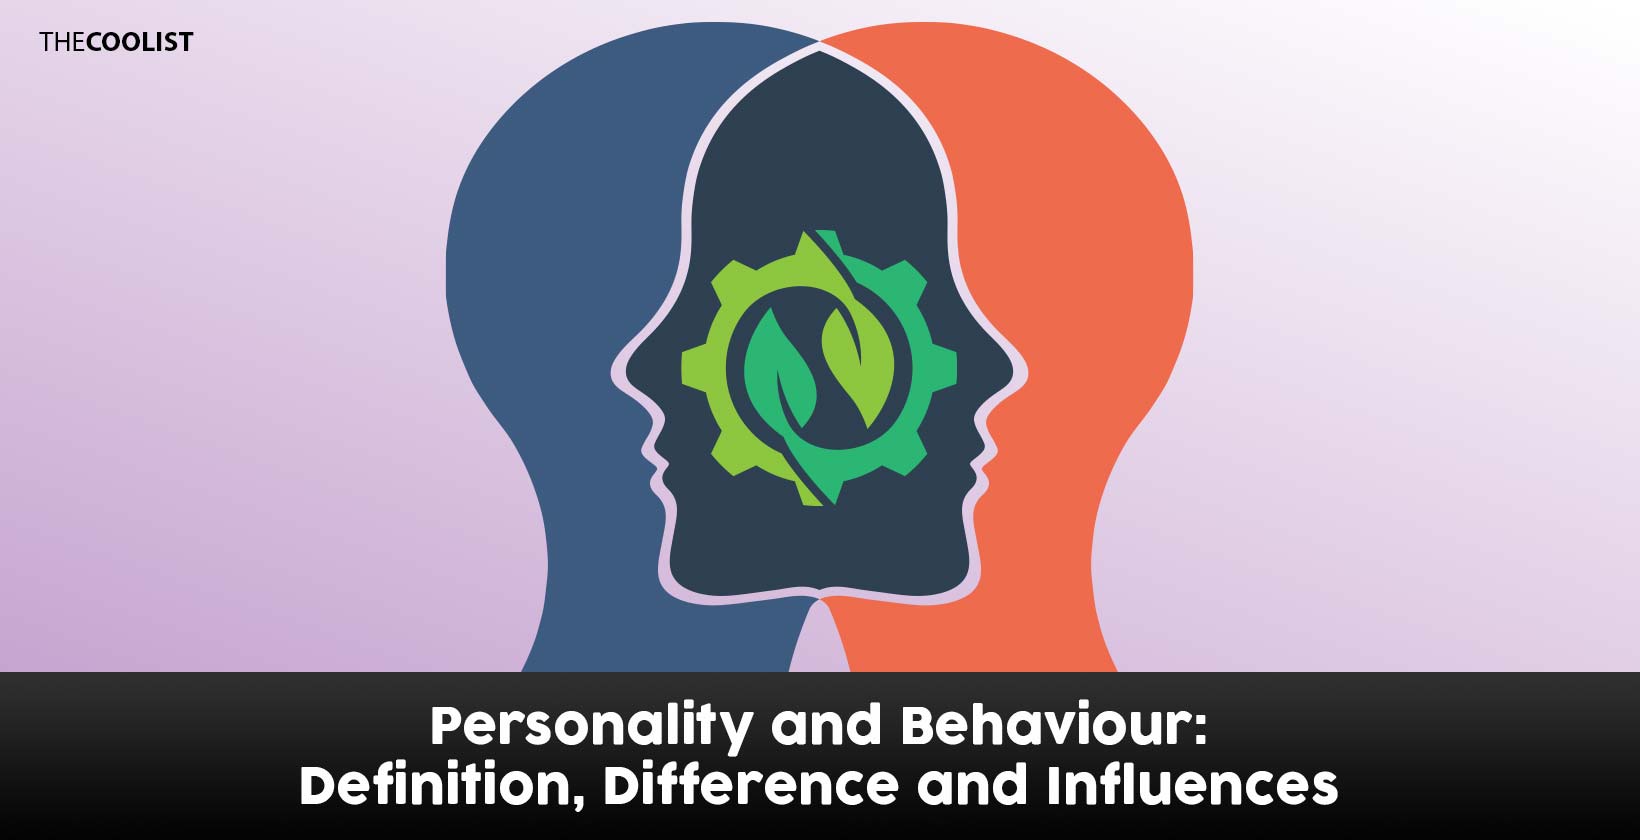 Comparison of personality and behavior